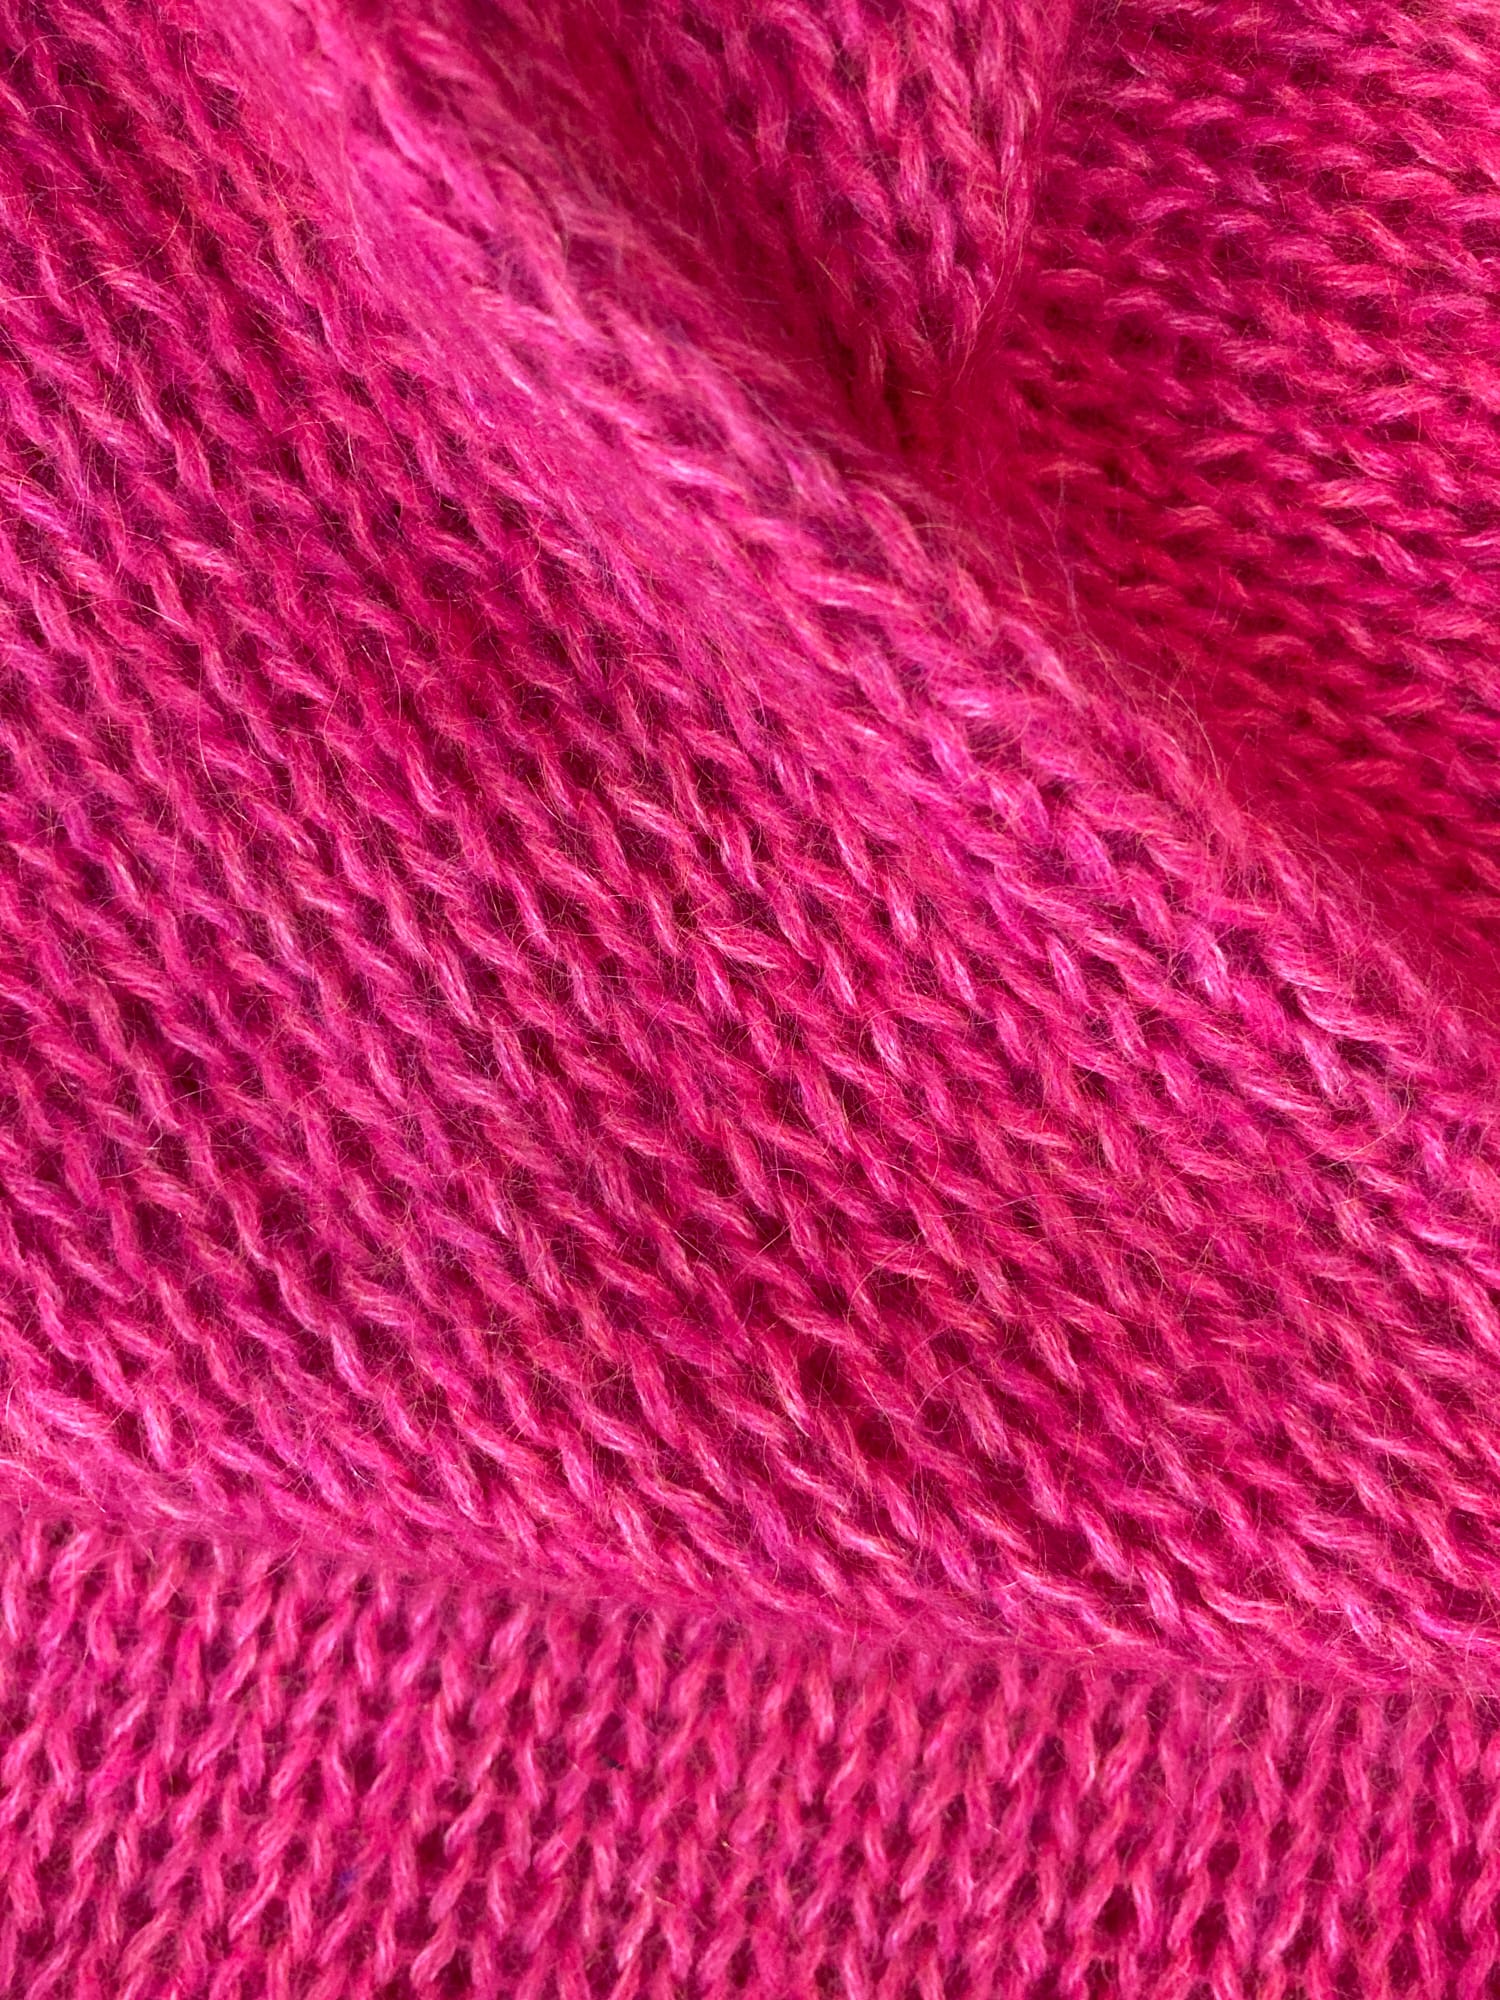 Robe de Chambre Comme des Garcons AW1999 pink mohair turtleneck